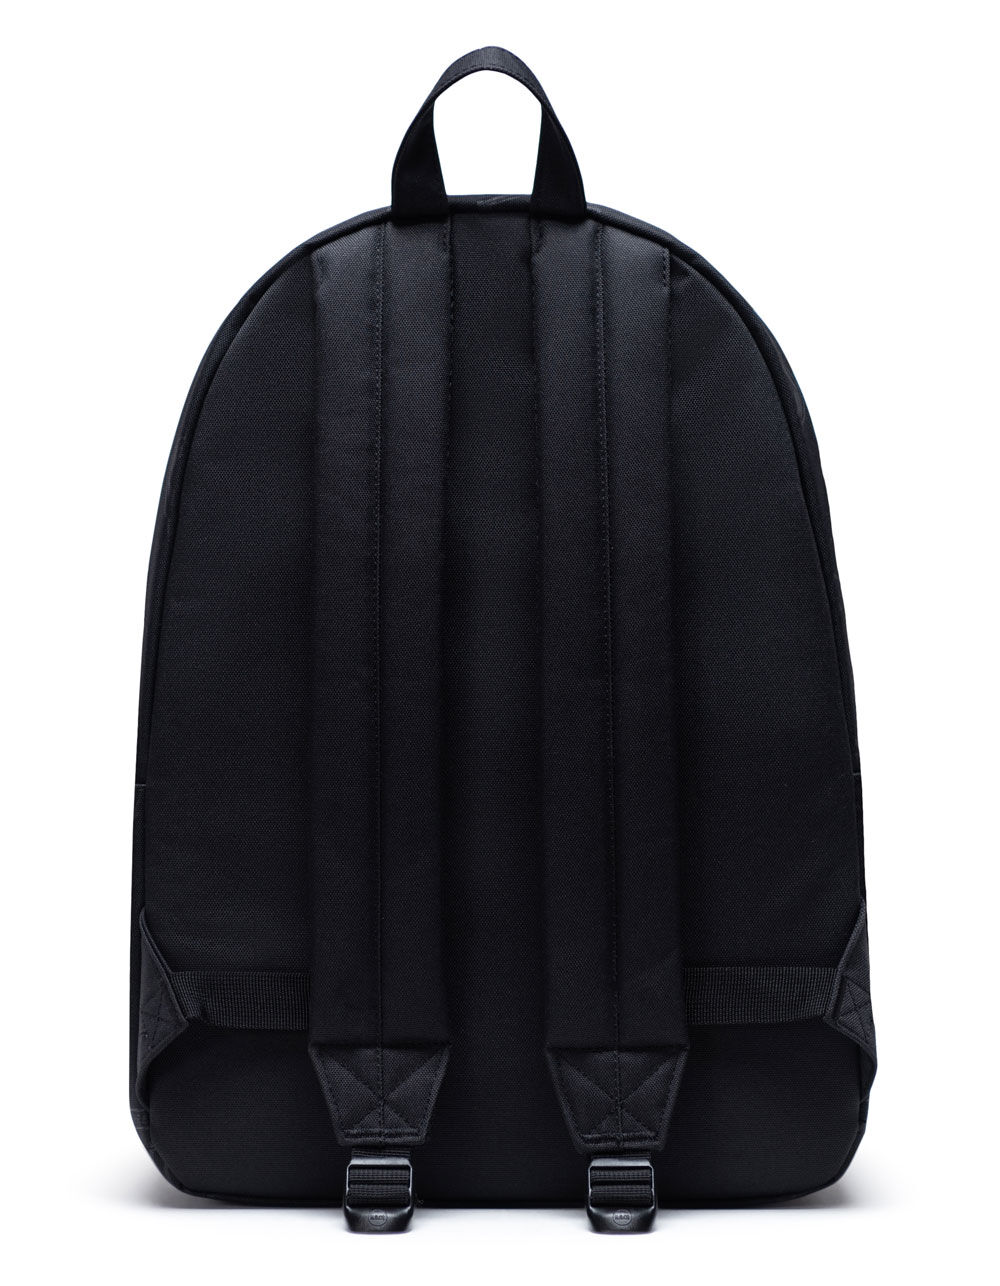 HERSCHEL SUPPLY CO. x SANTA CRUZ Classic XL Black Backpack - BLACK | Tillys